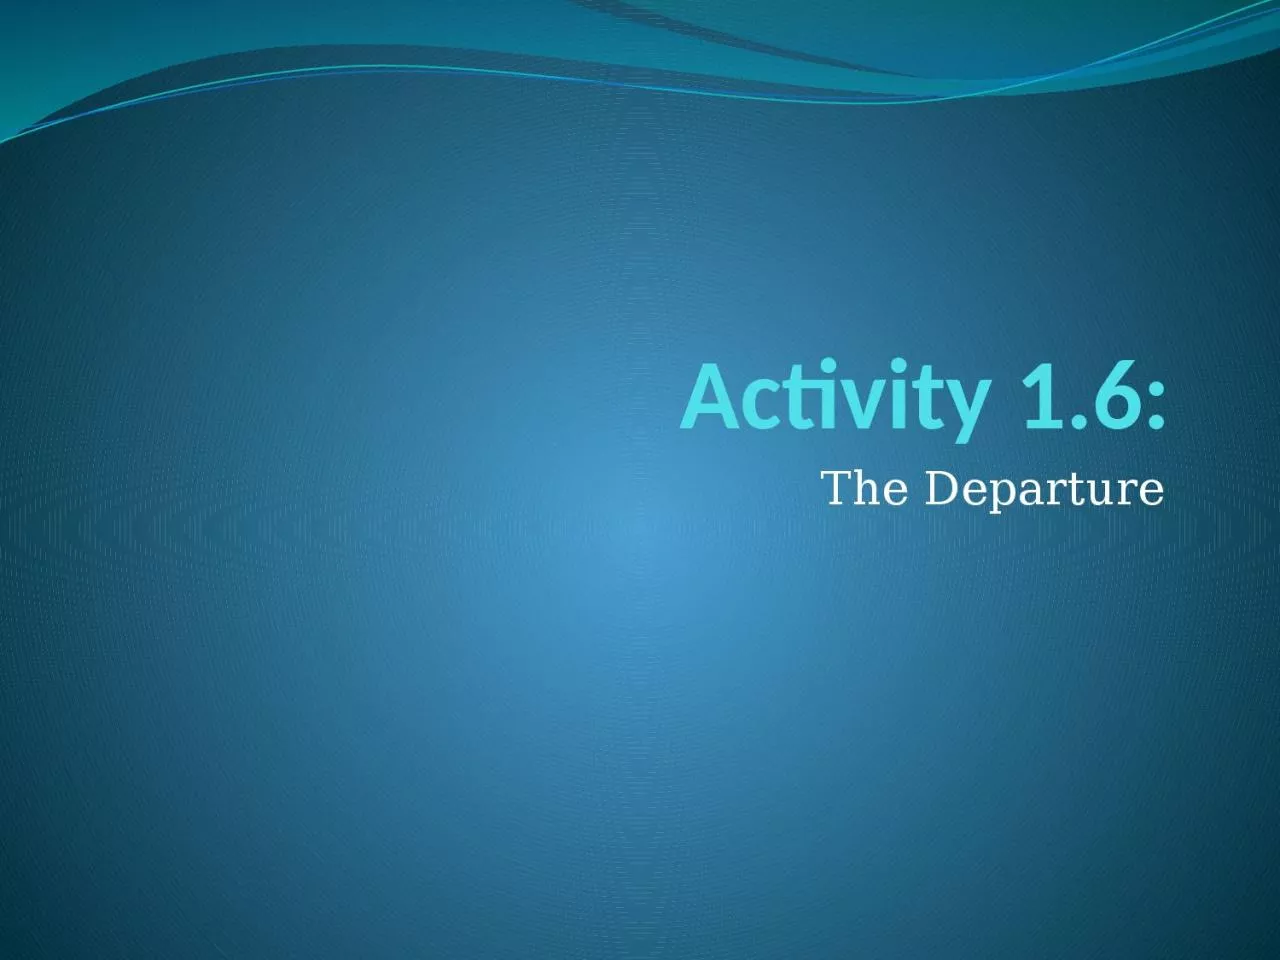 Activity 1.6: The Departure